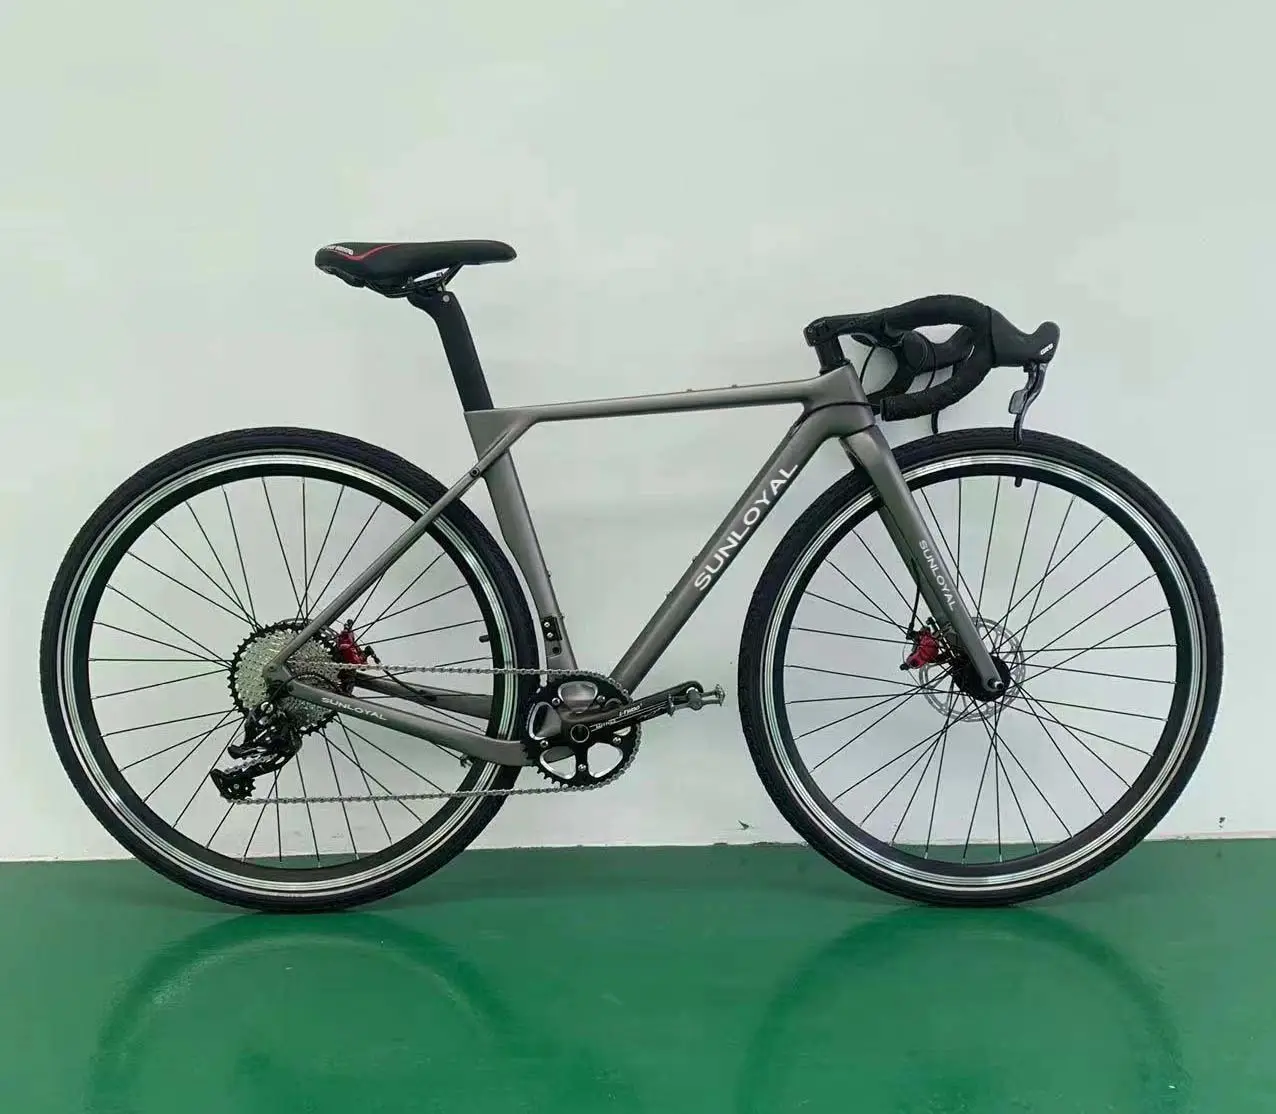 SL-700CX45C 1*11S çakıl karbon yol bisikleti